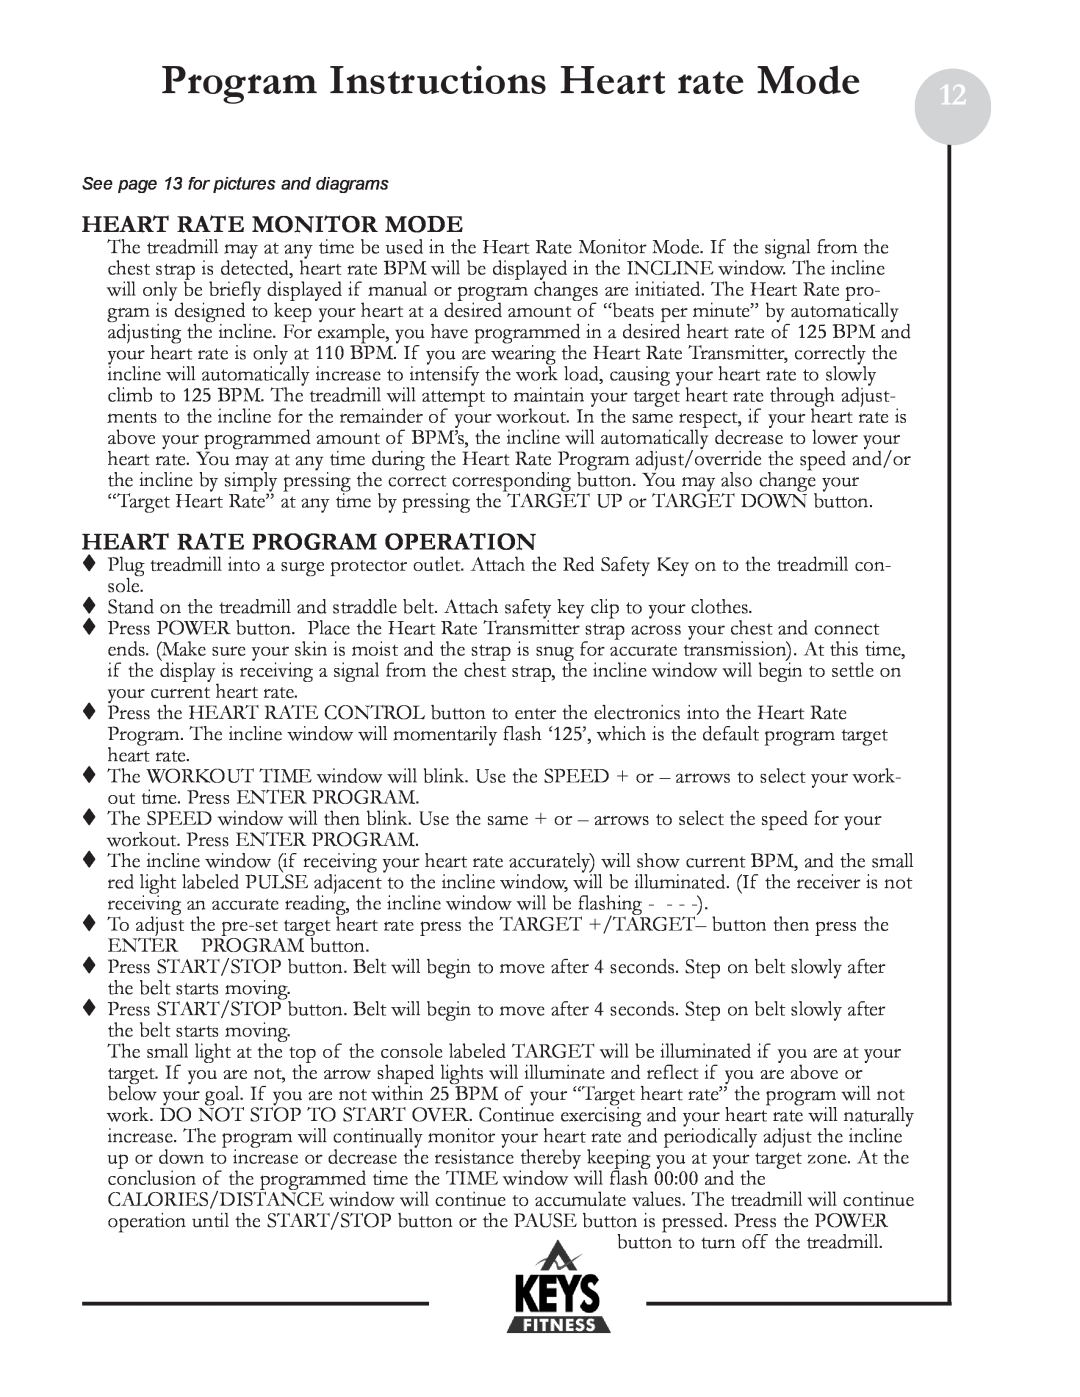 Keys Fitness HT800HR Program Instructions Heart rate Mode, Heart Rate Monitor Mode, Heart Rate Program Operation 